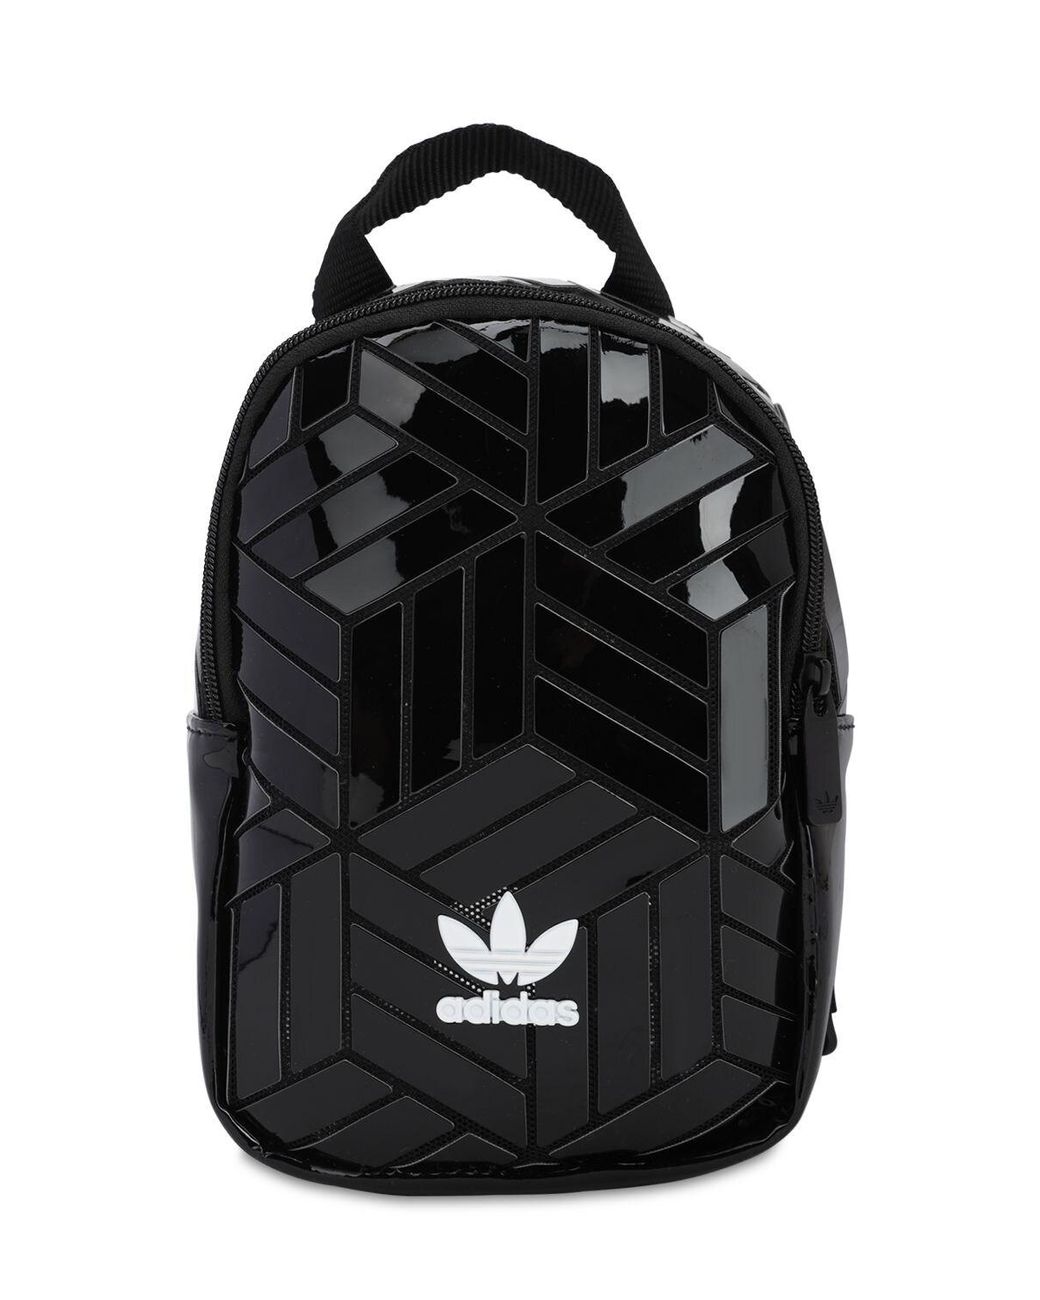 black leather adidas backpack